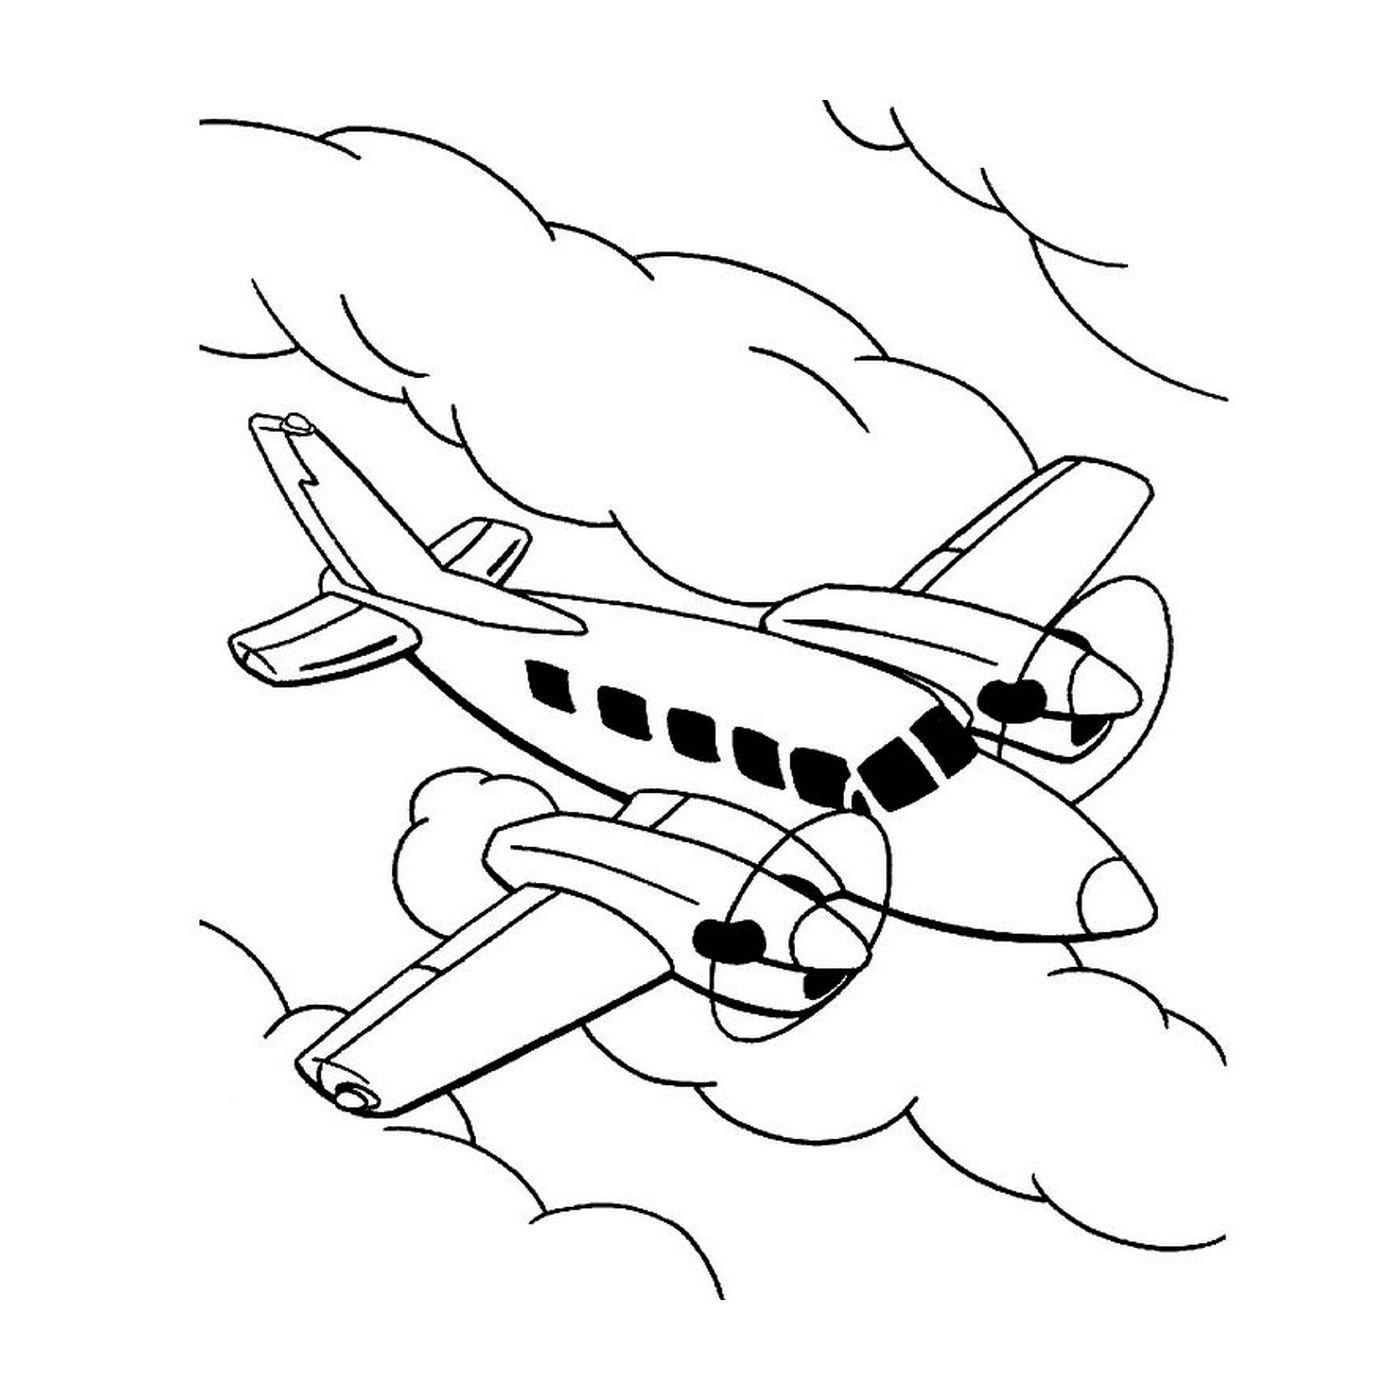  Самолёт летит в небо среди облаков 